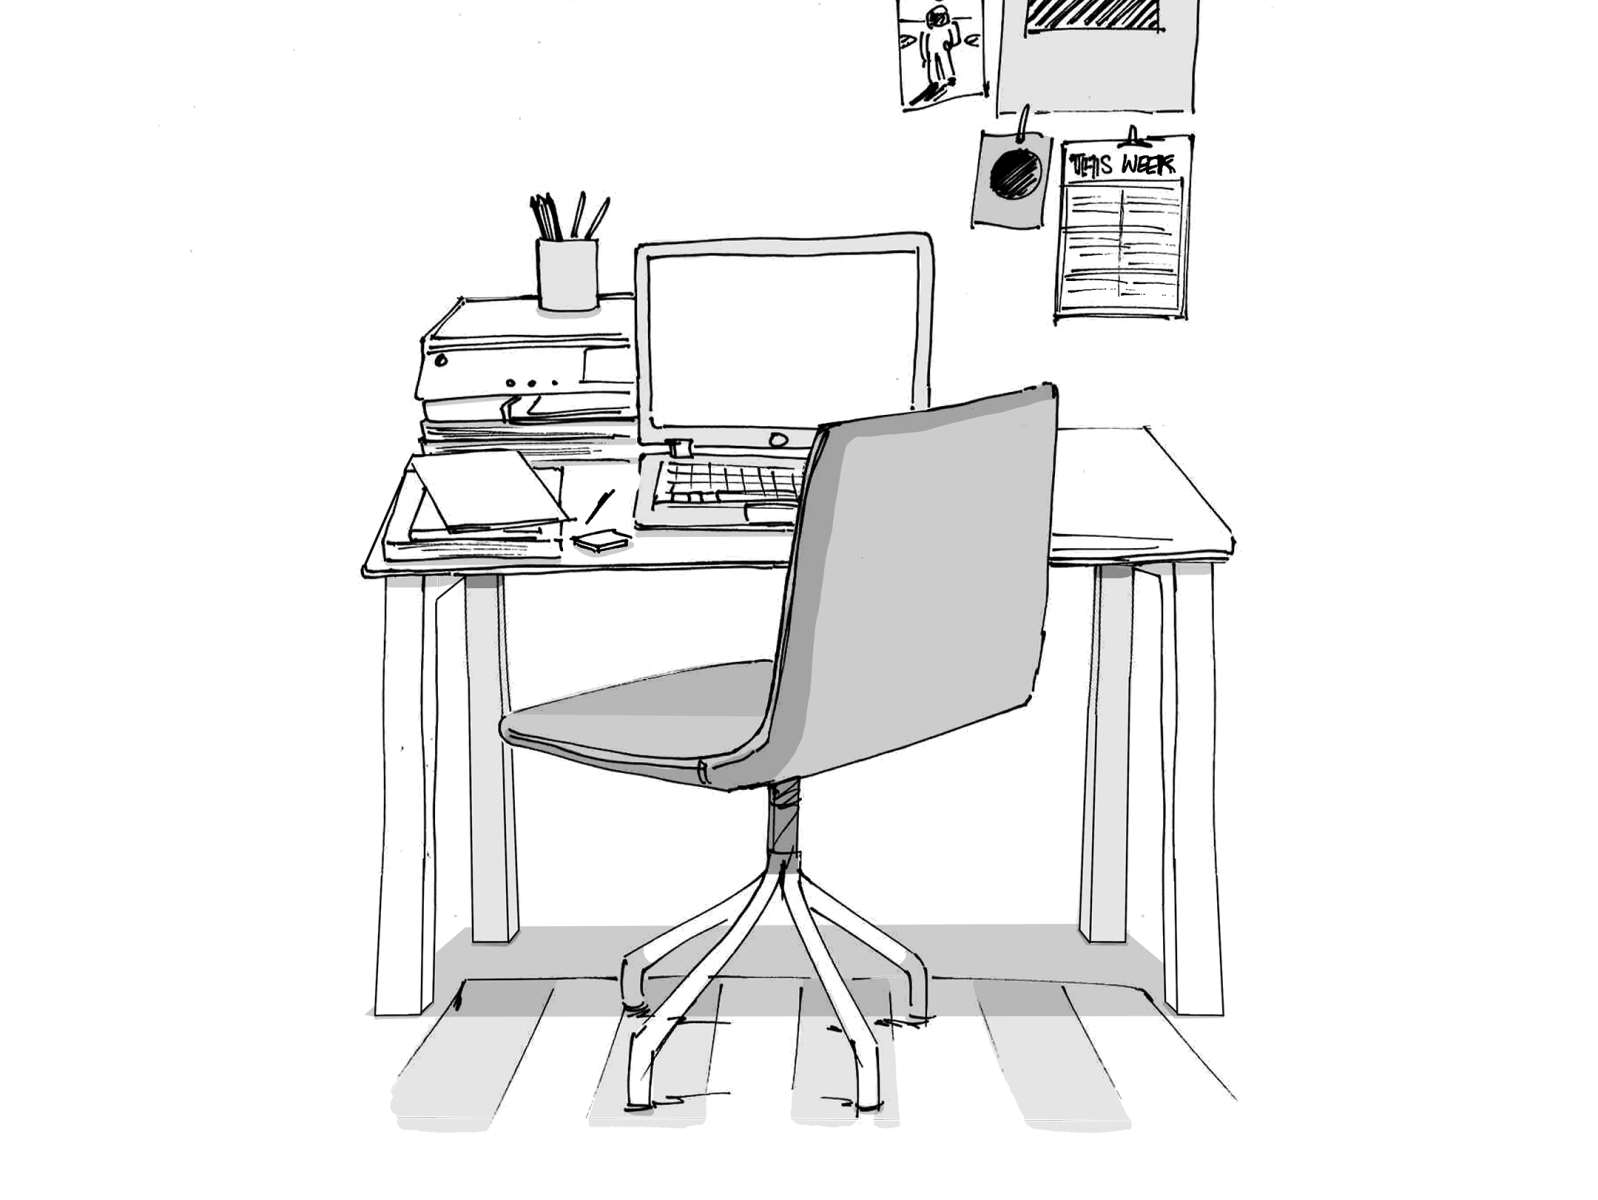 Risko Drawing Desk by Digitalab for Viarco